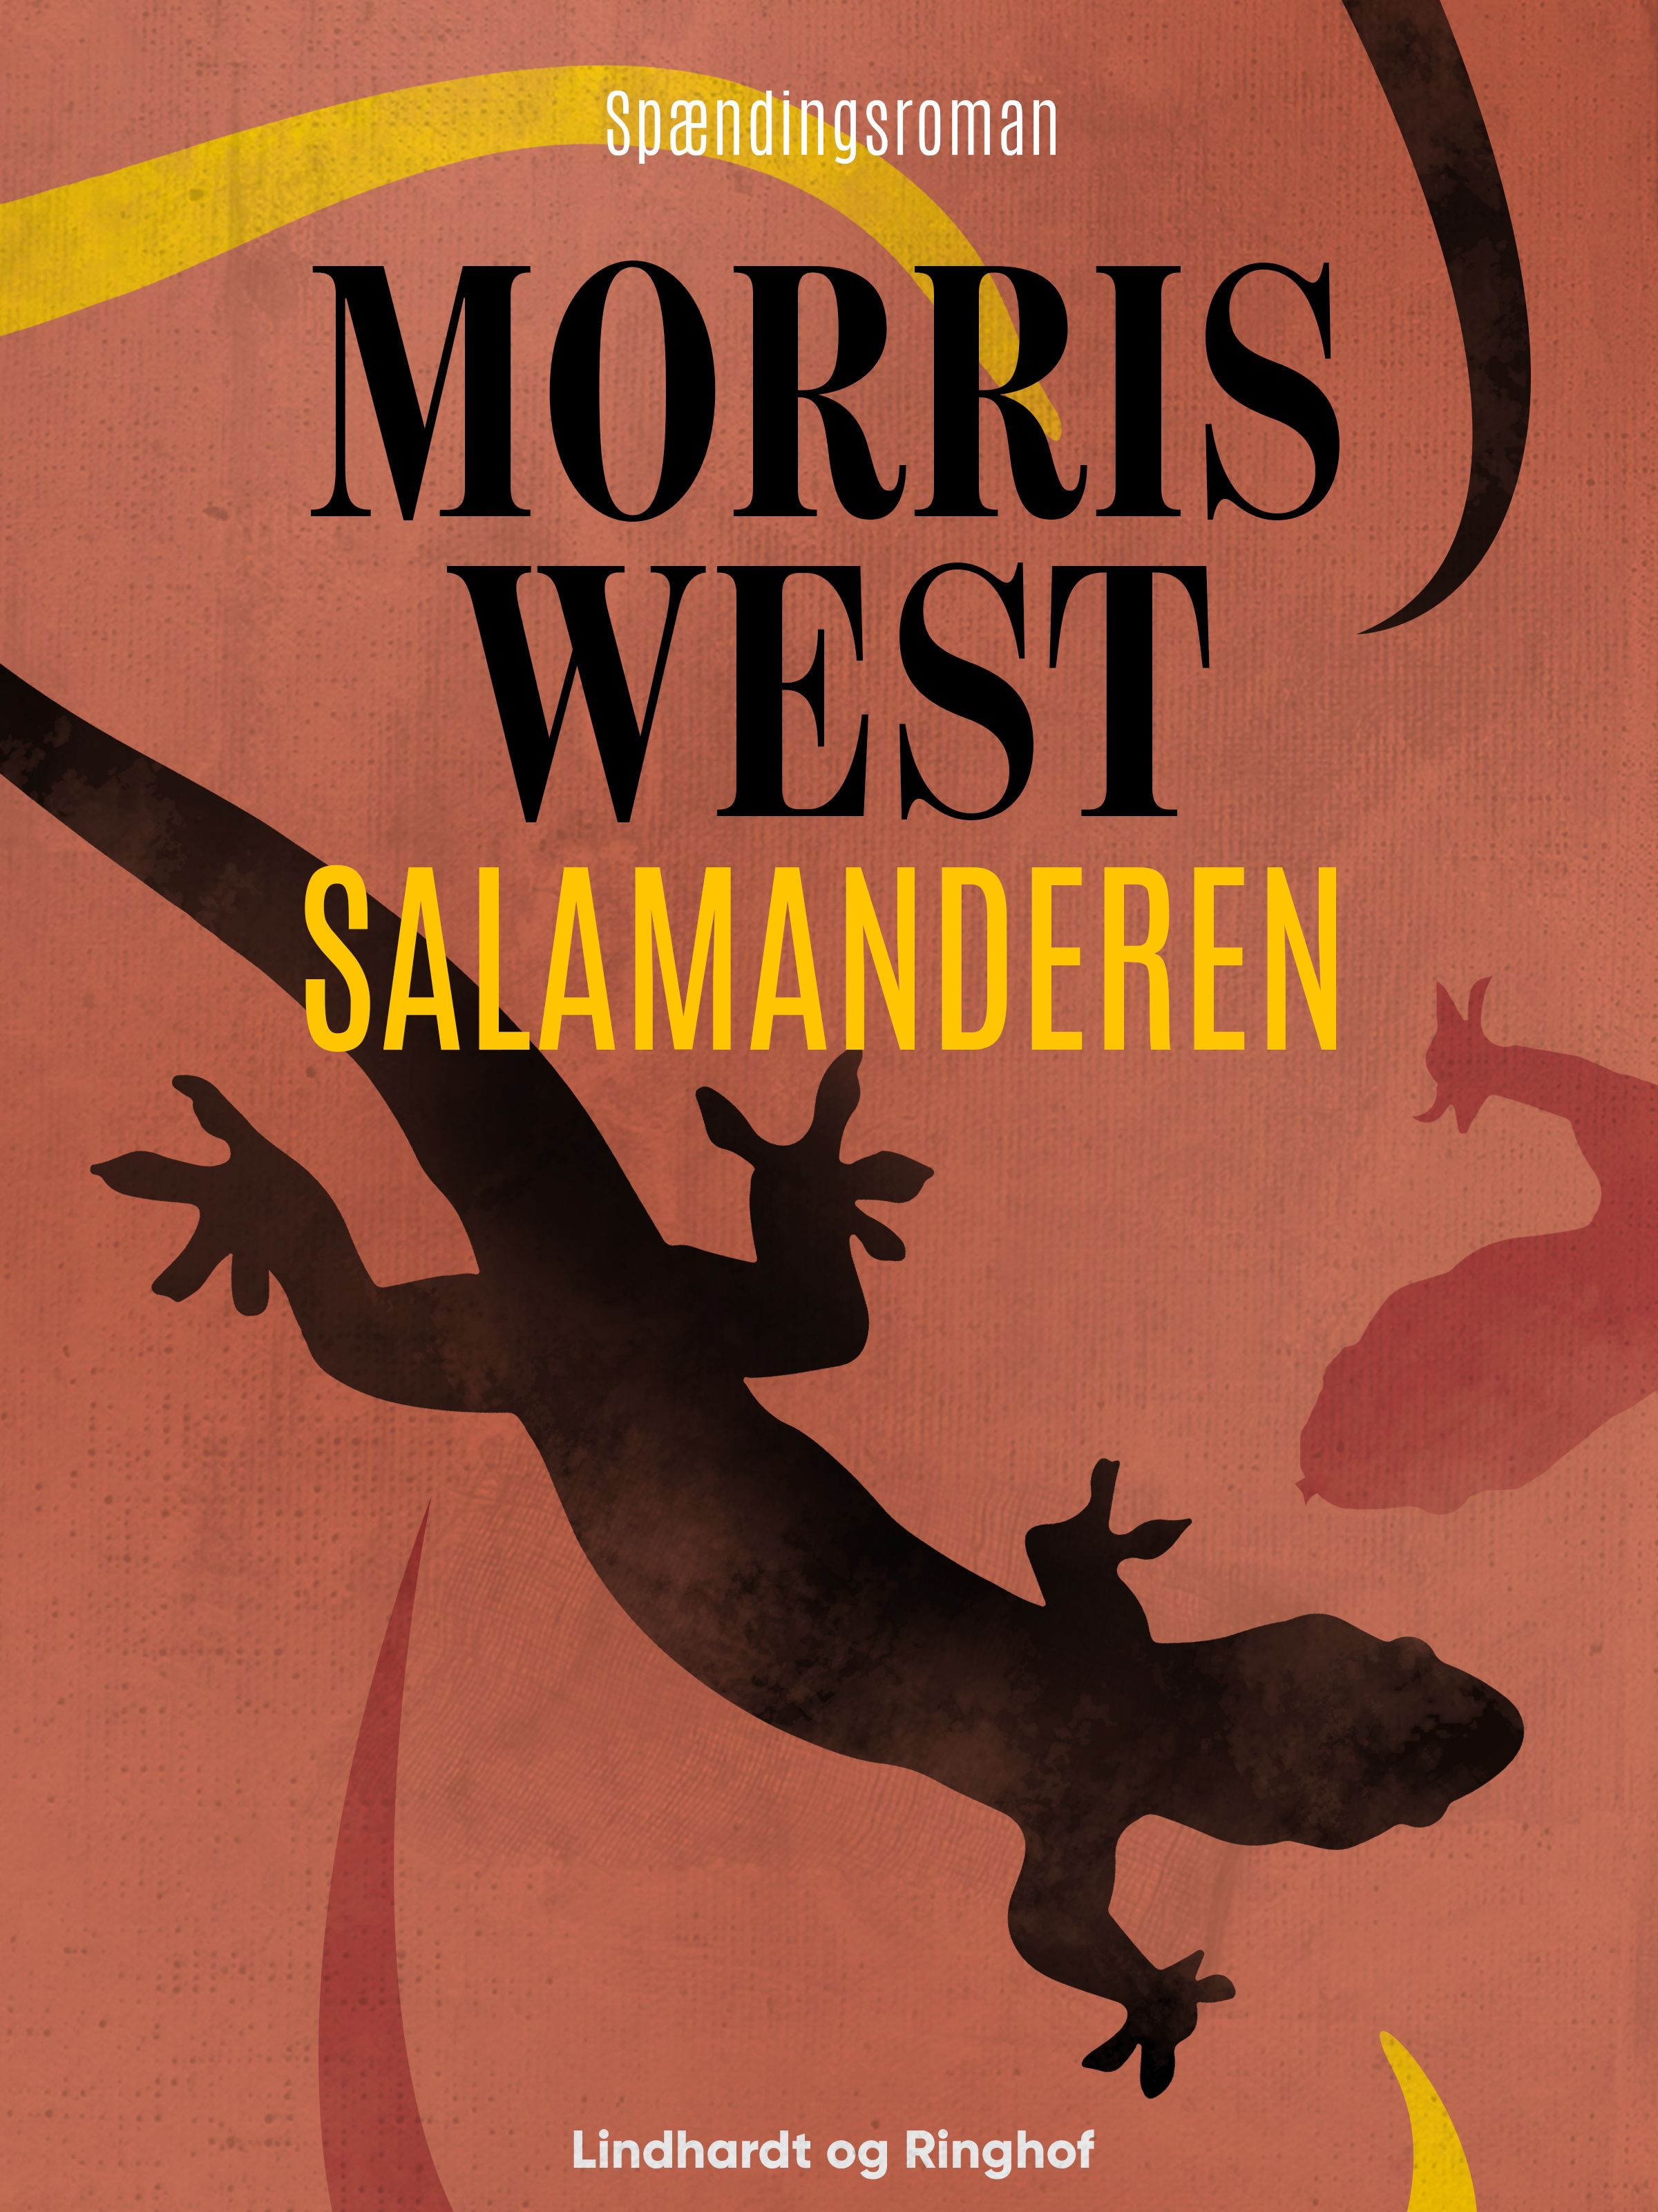 Salamanderen, ljudbok av Morris West